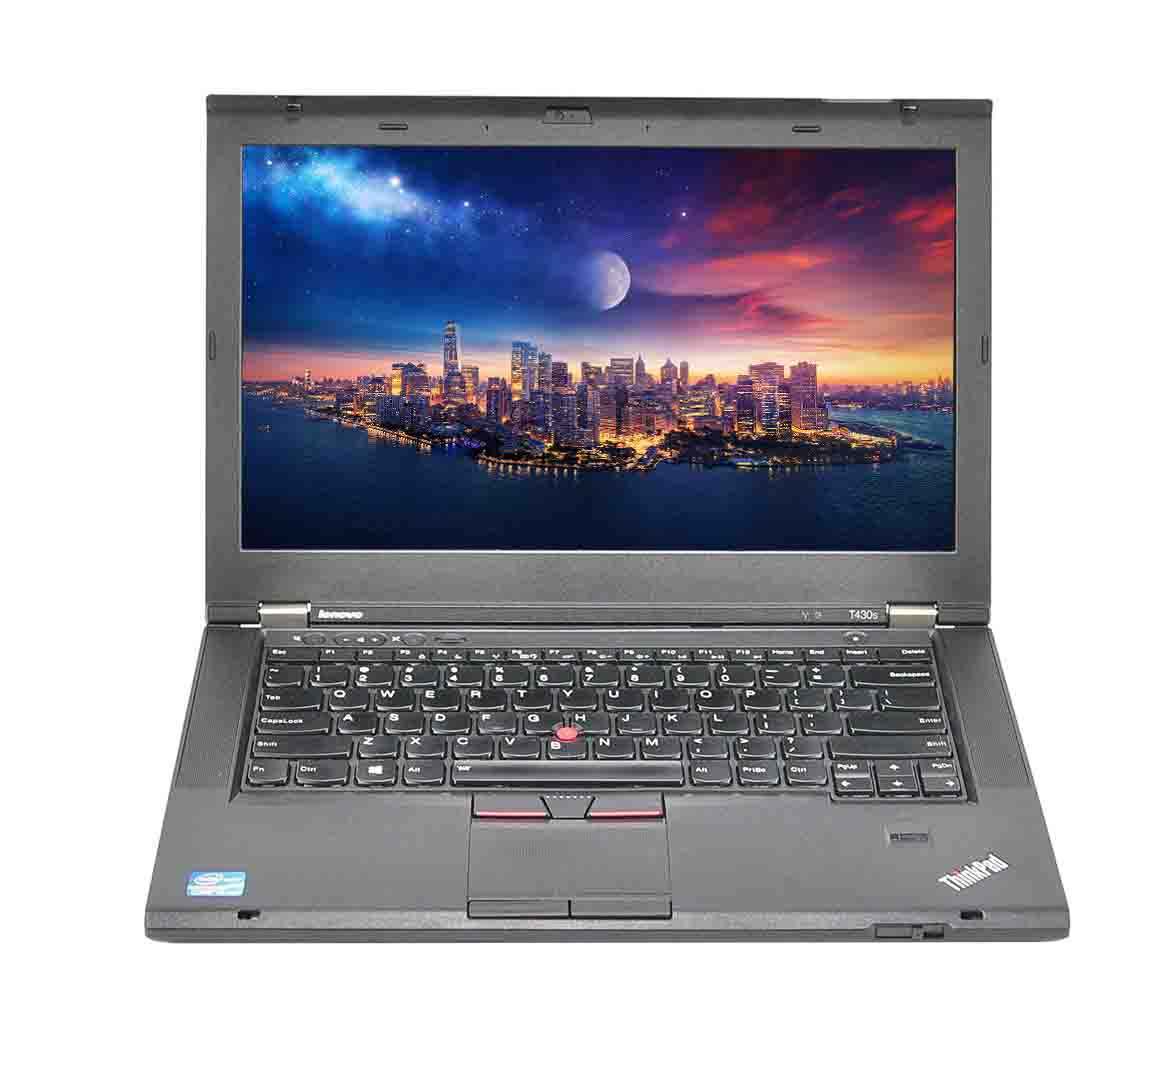 Lenovo ThinkPad T430 Business Laptop, Intel Core i5-3rd Gen. CPU